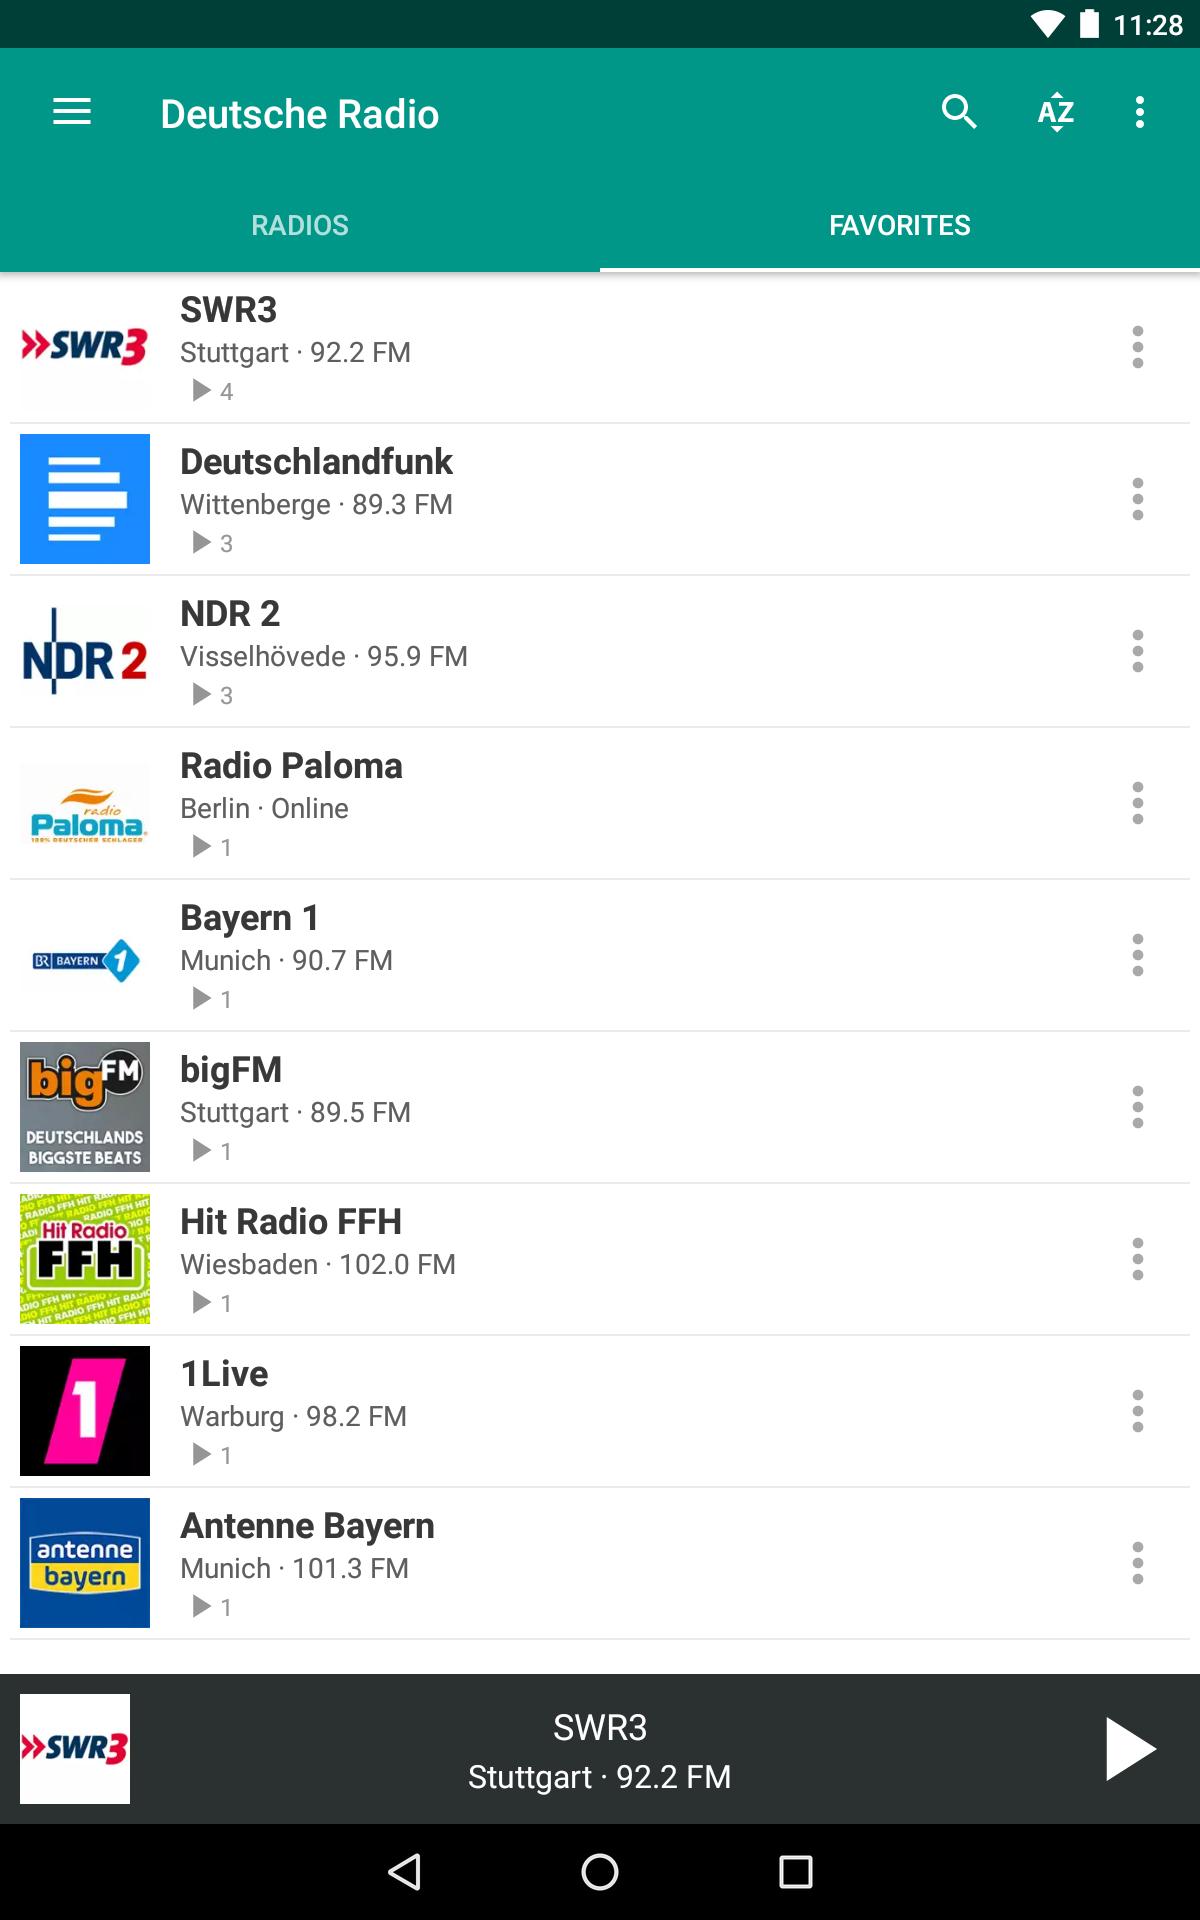 Deutsches Radio for Android - APK Download